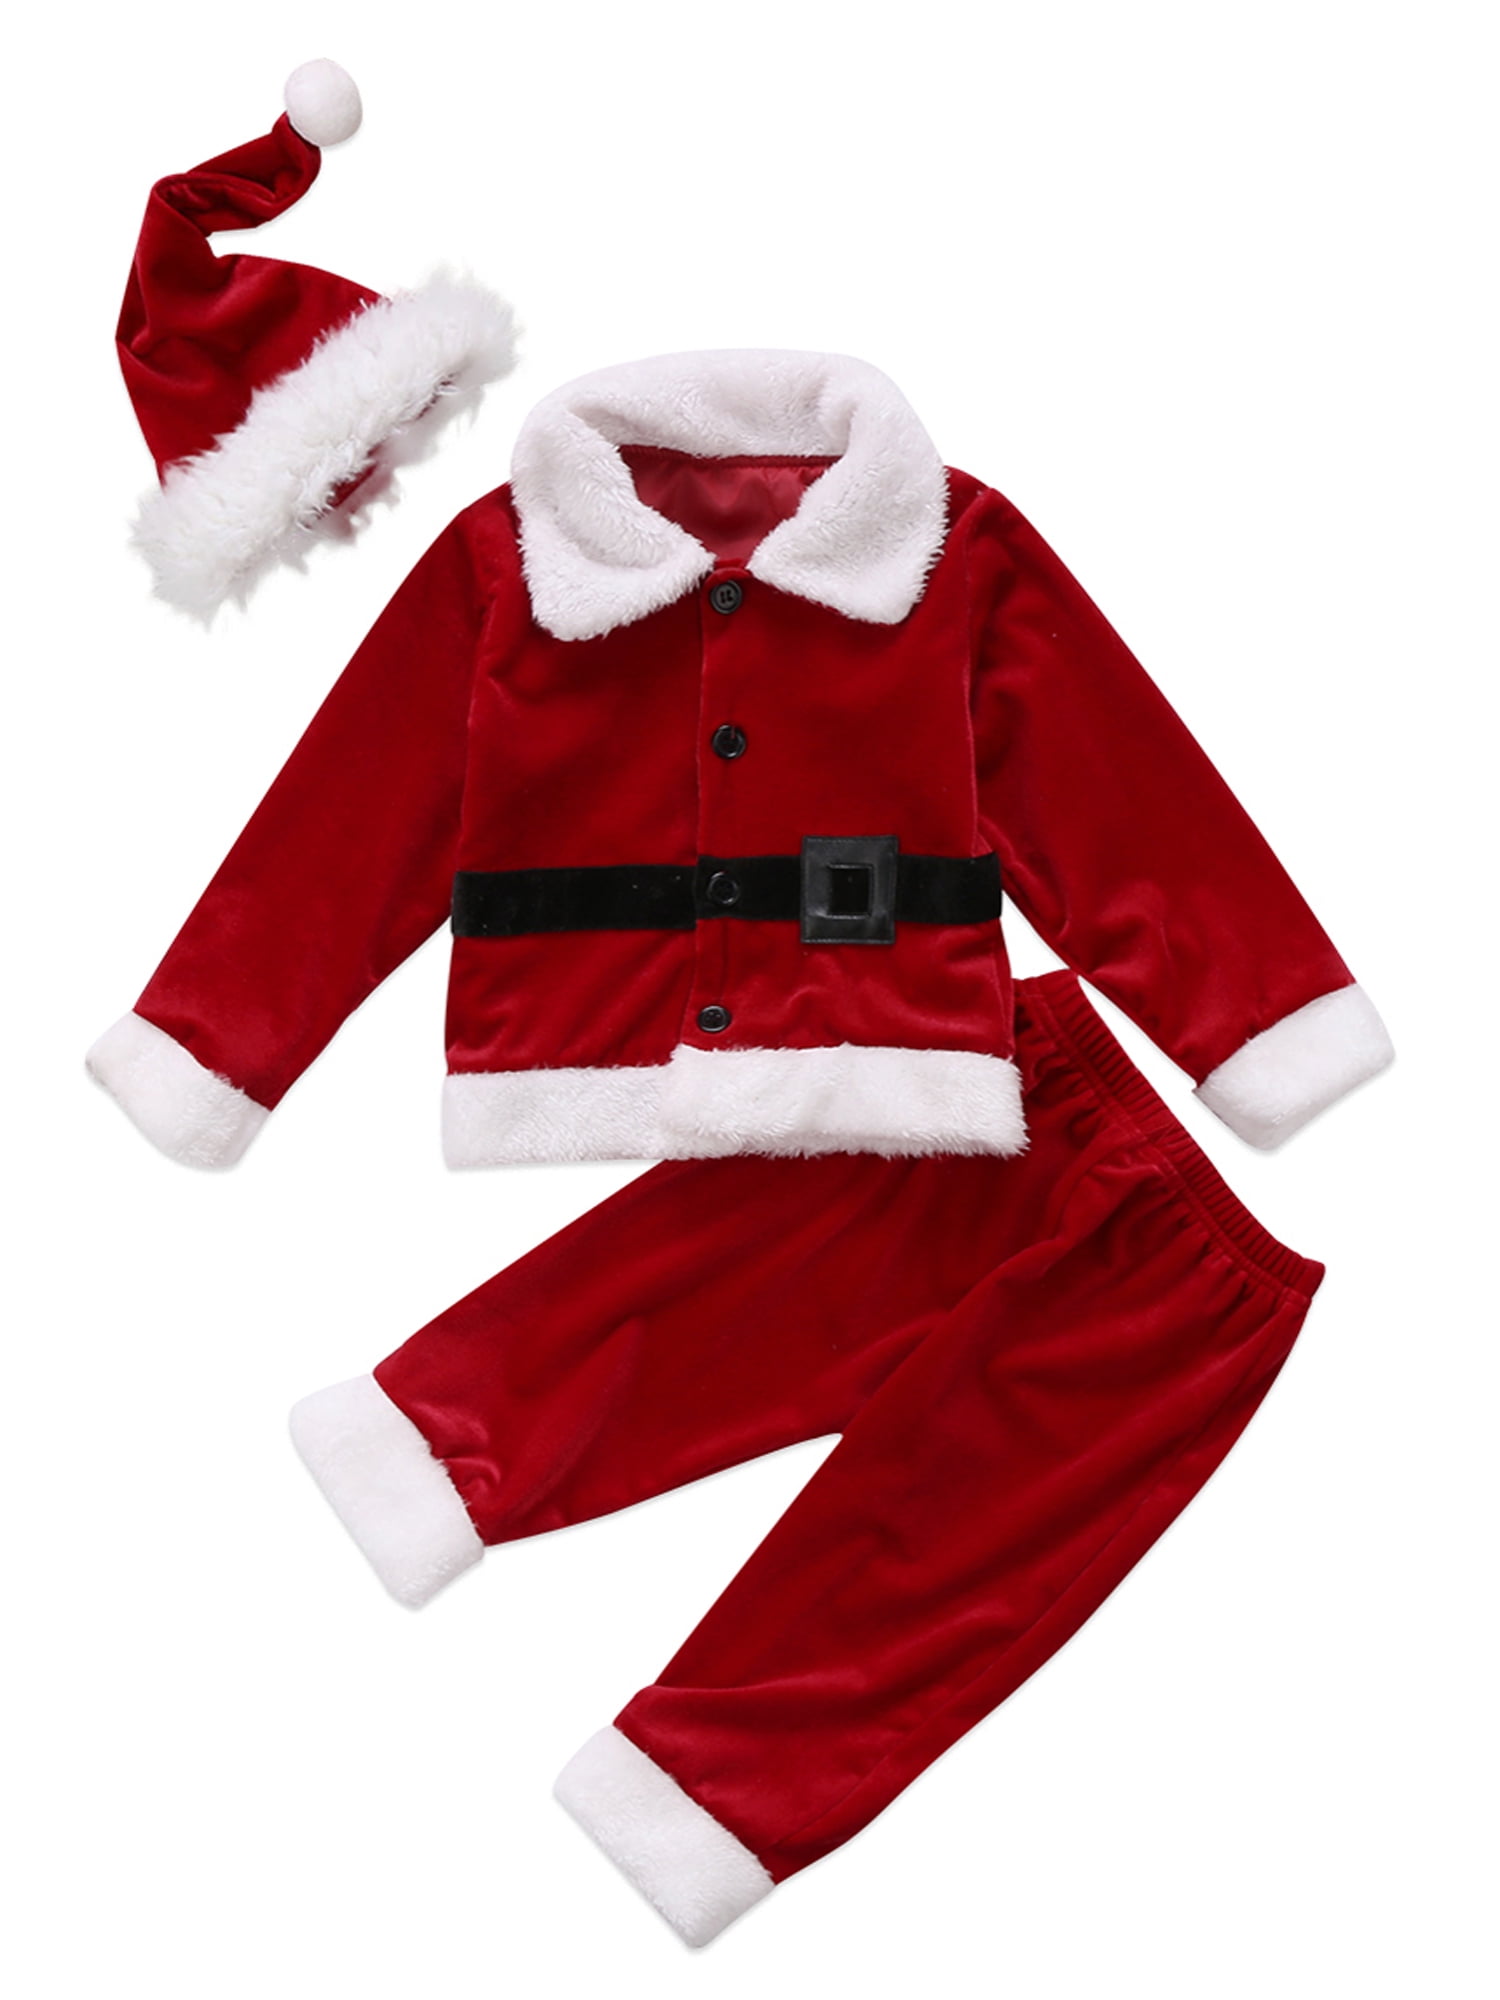 Toddler Baby Girls My 1st Christmas Outfits Santa Claus Tutu Dress Xmas Costume